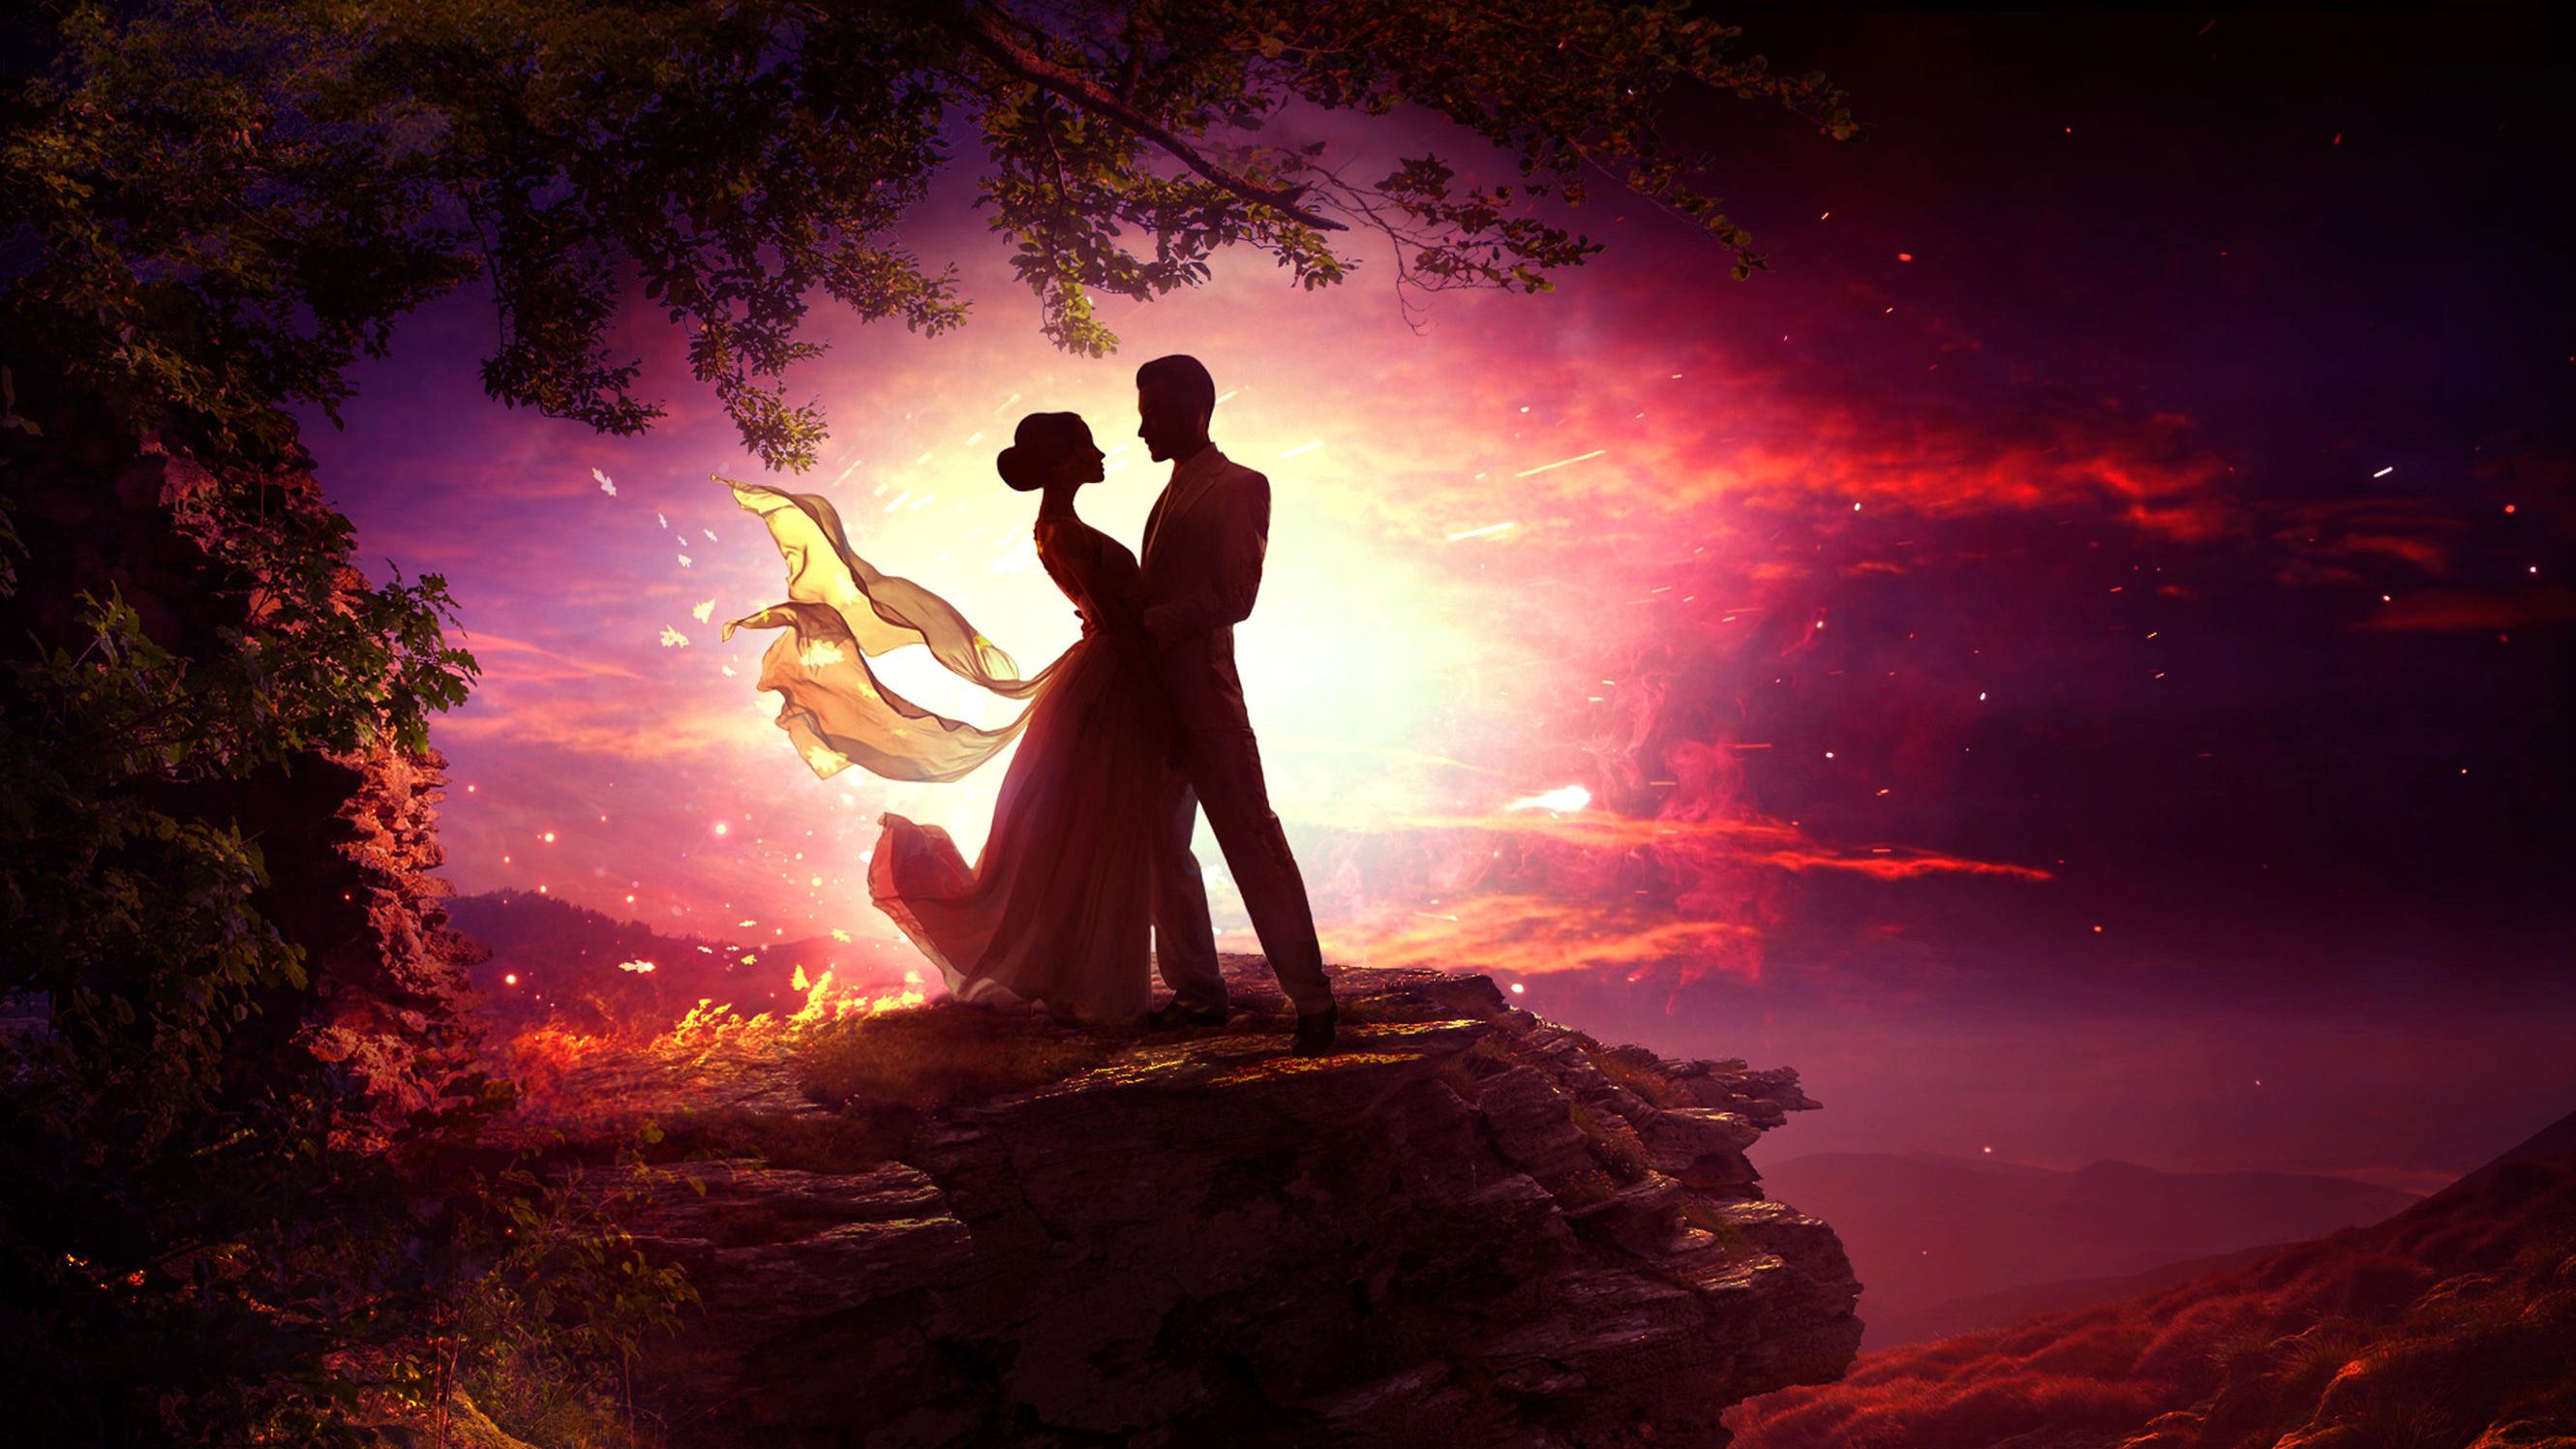 Dancing Couple In Moonlight, HD Love, 4k Wallpaper, Image